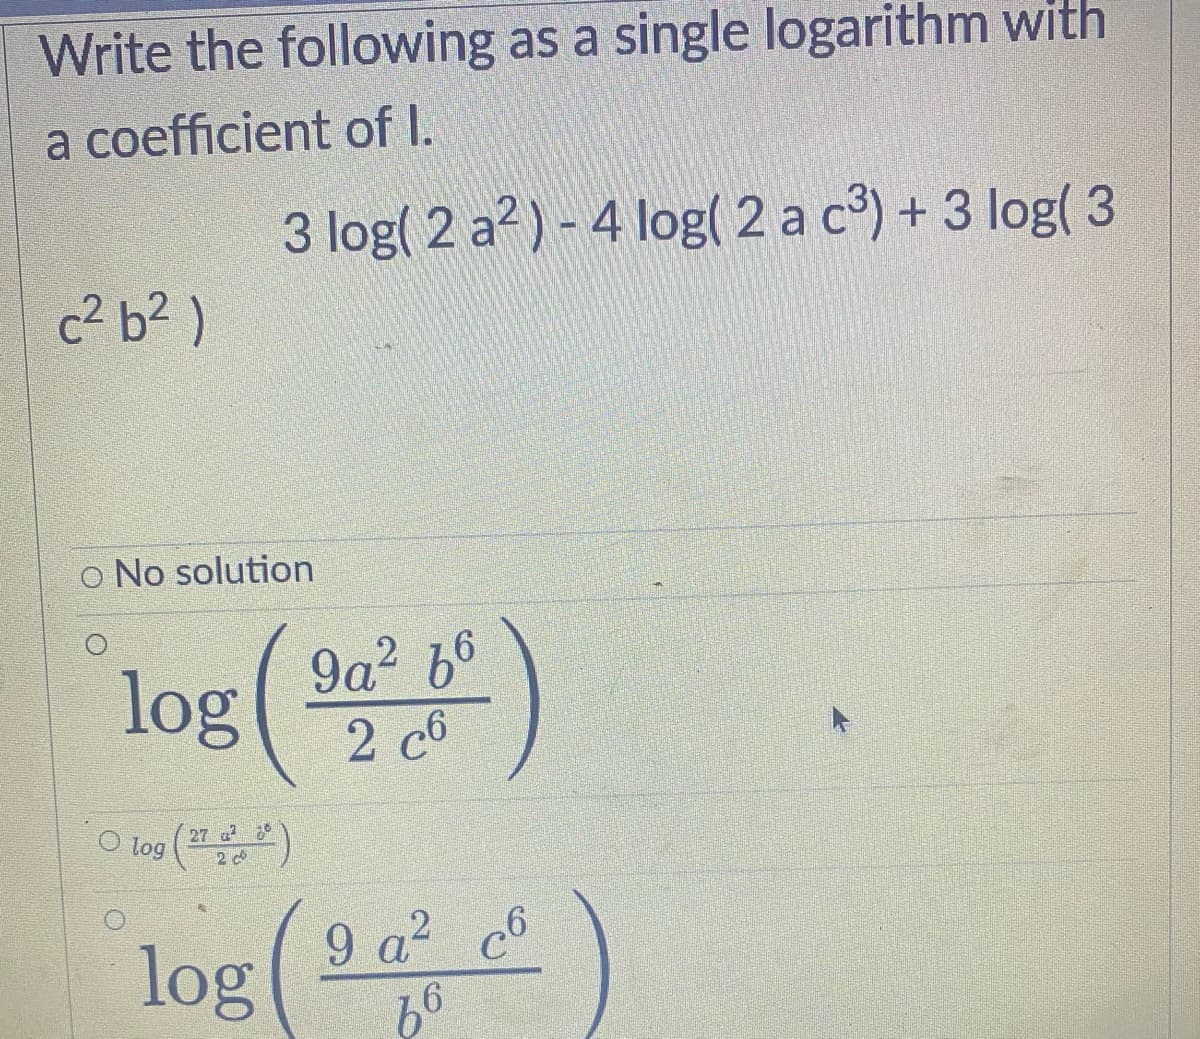 Write the following as a single logarithm with
a coefficient of I.
c²b²)
3 log( 2 a²) - 4 log( 2 a c³) + 3 log(3
O No solution
log (²)
2
O log (27 2²2)
log (²)